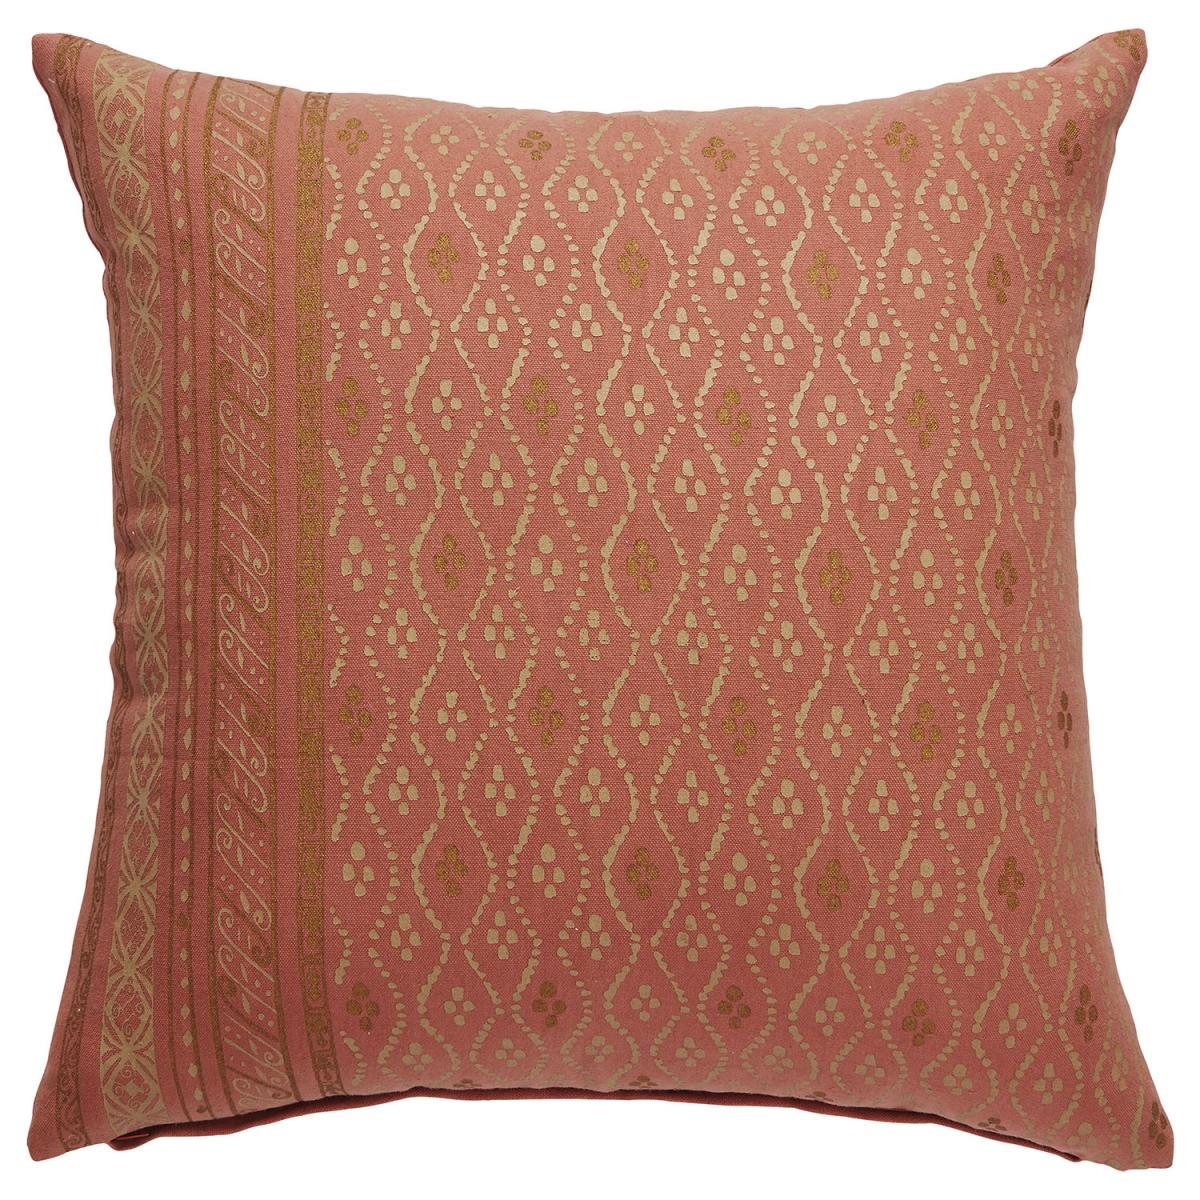 Plw102844 20 X 20 In. Charmed Jennifer Adams Nerissa Red & Gold Geometric Poly Throw Pillow